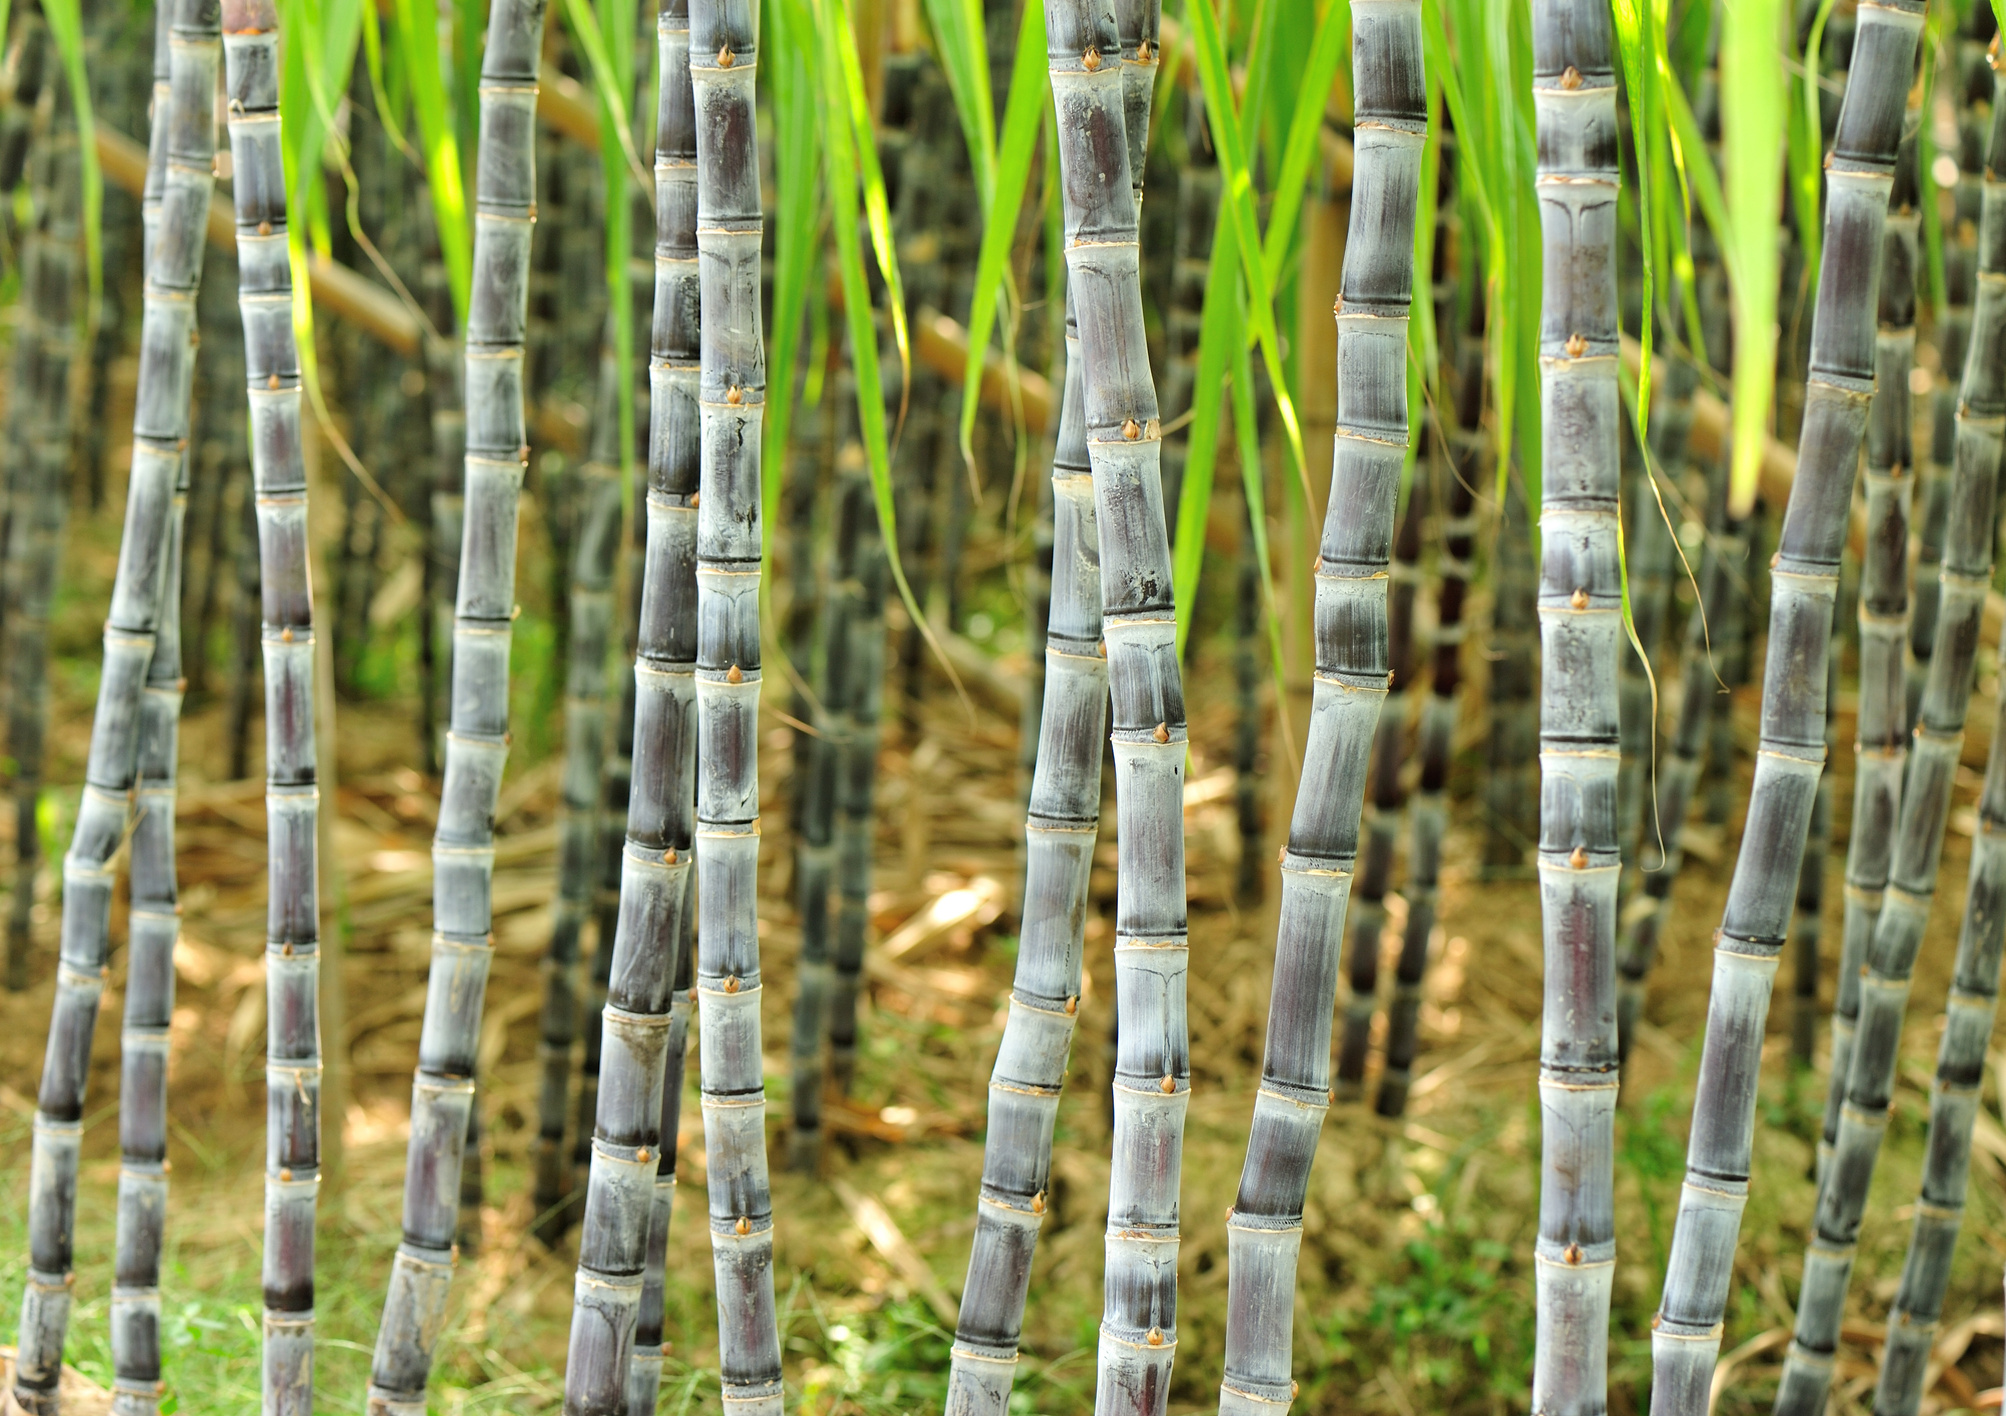 sugarcane plant